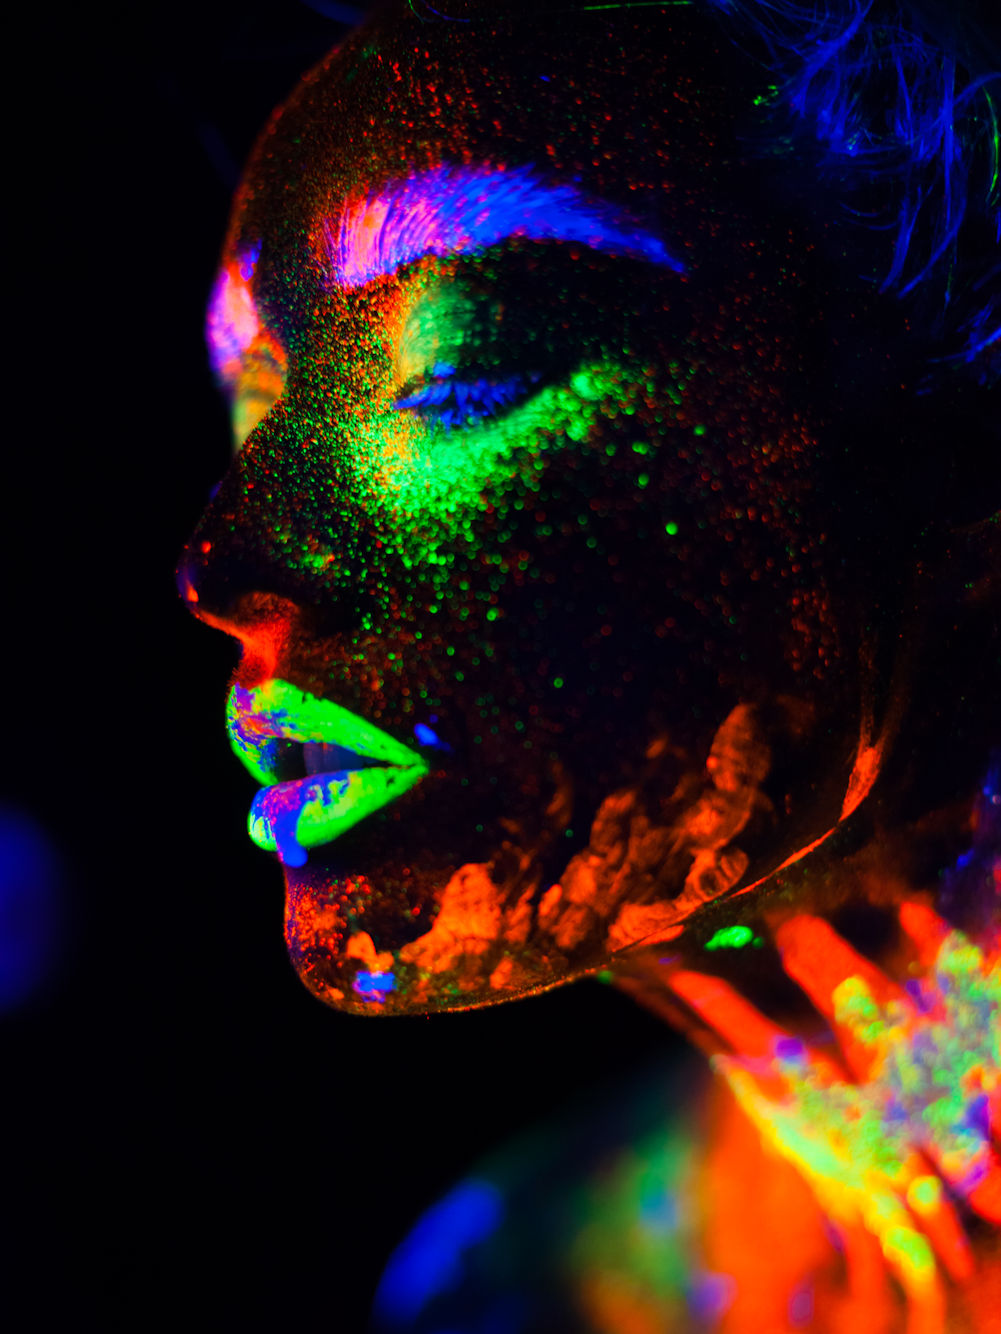 Kryvaline Neon Fluorescent Face and Body Paint 30g Orange - Kryvaline Body Art Makeup | Glitter Tattoos, Face & Body Paint, Design - Kryvaline Body Art Makeup